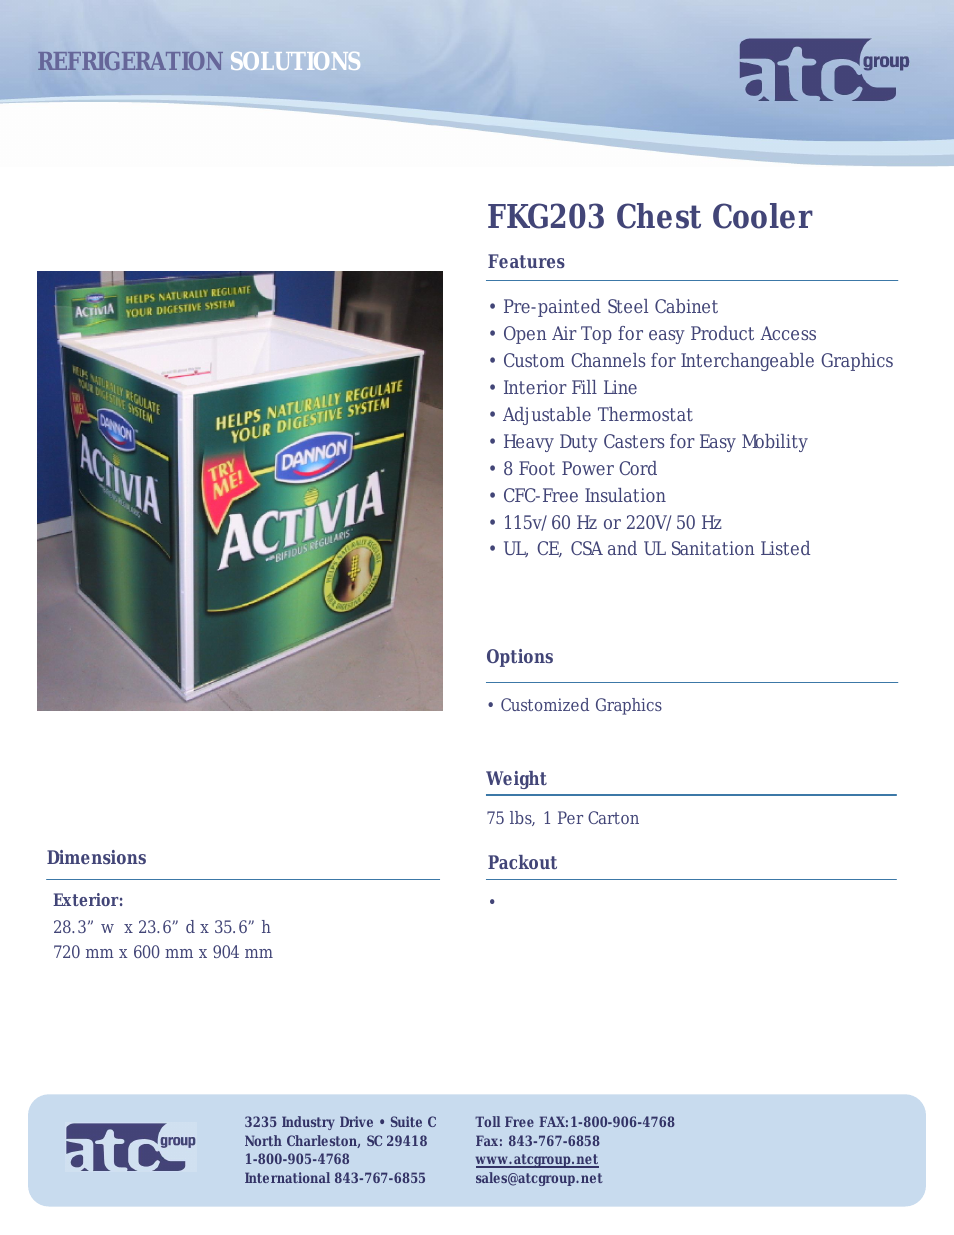 Chest Cooler FKG203